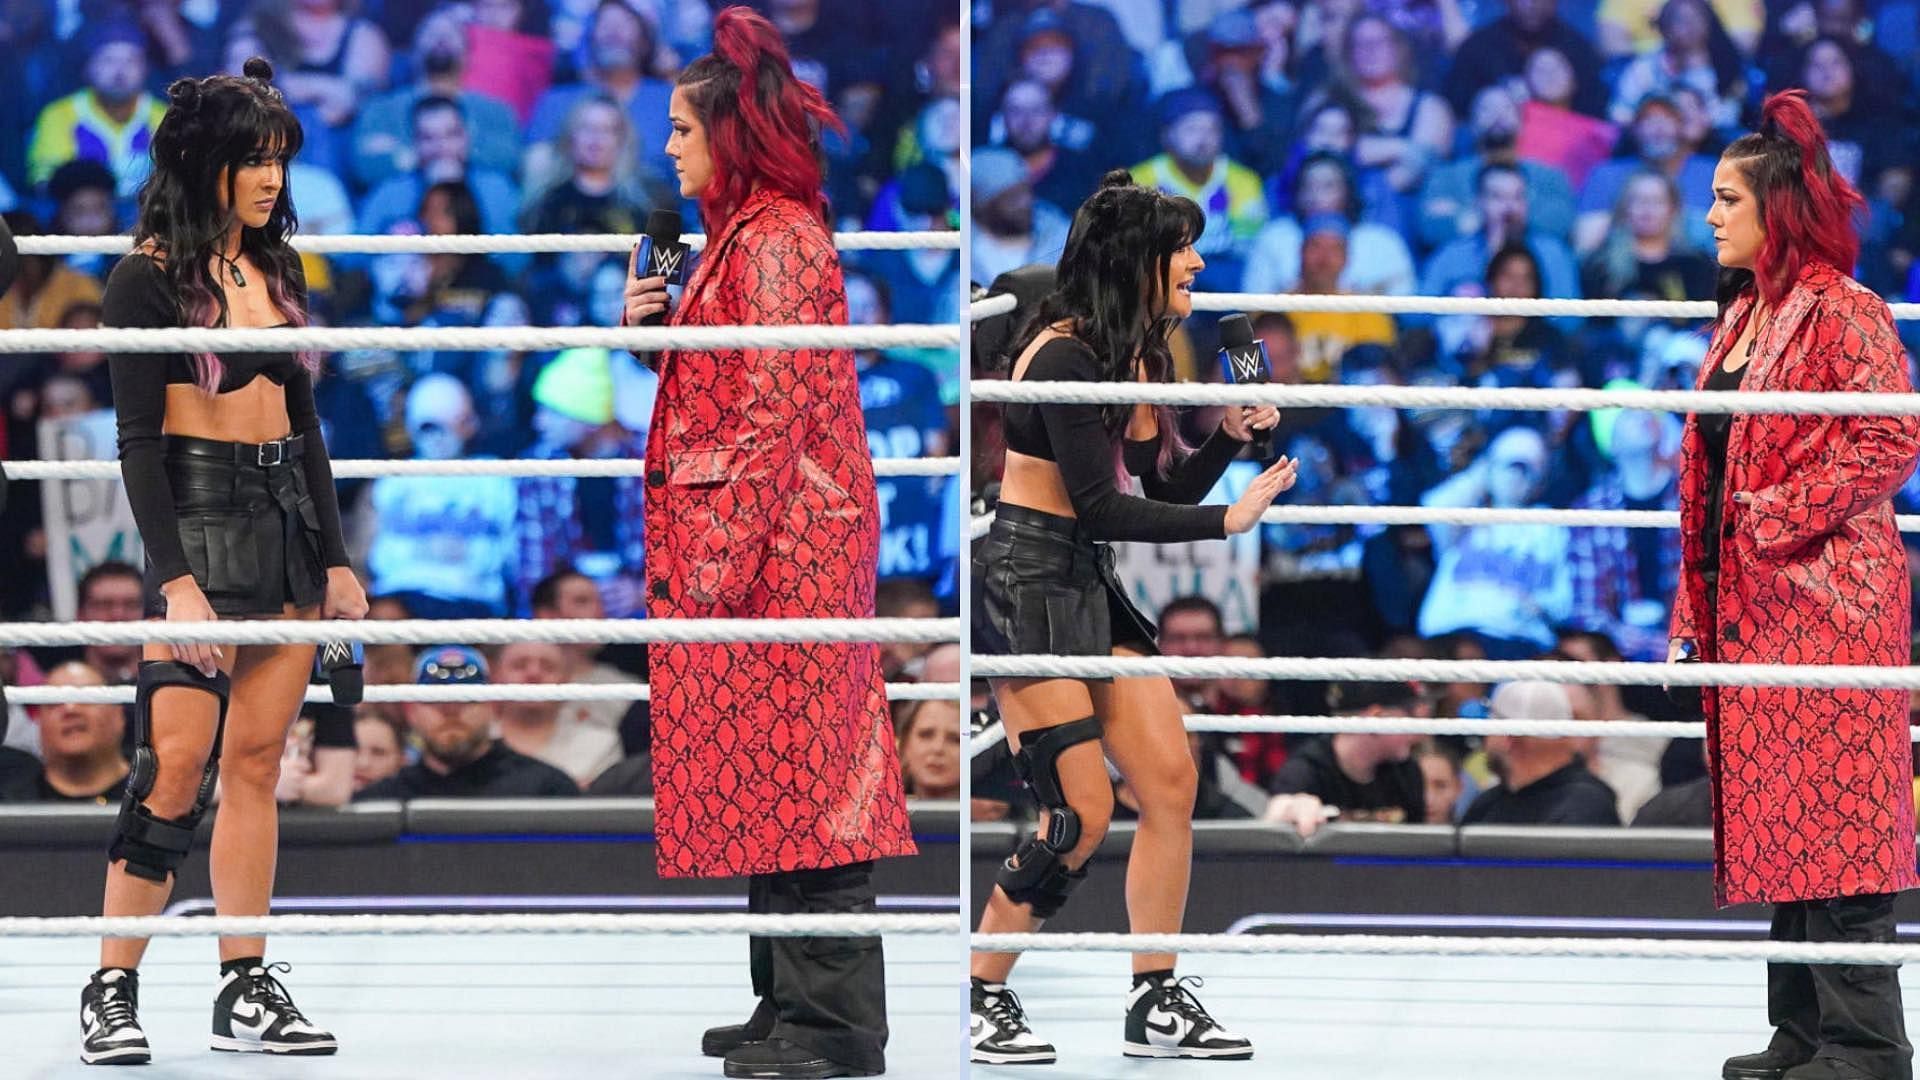 Bayley and Dakota Kai had an intense talk on WWE SmackDown